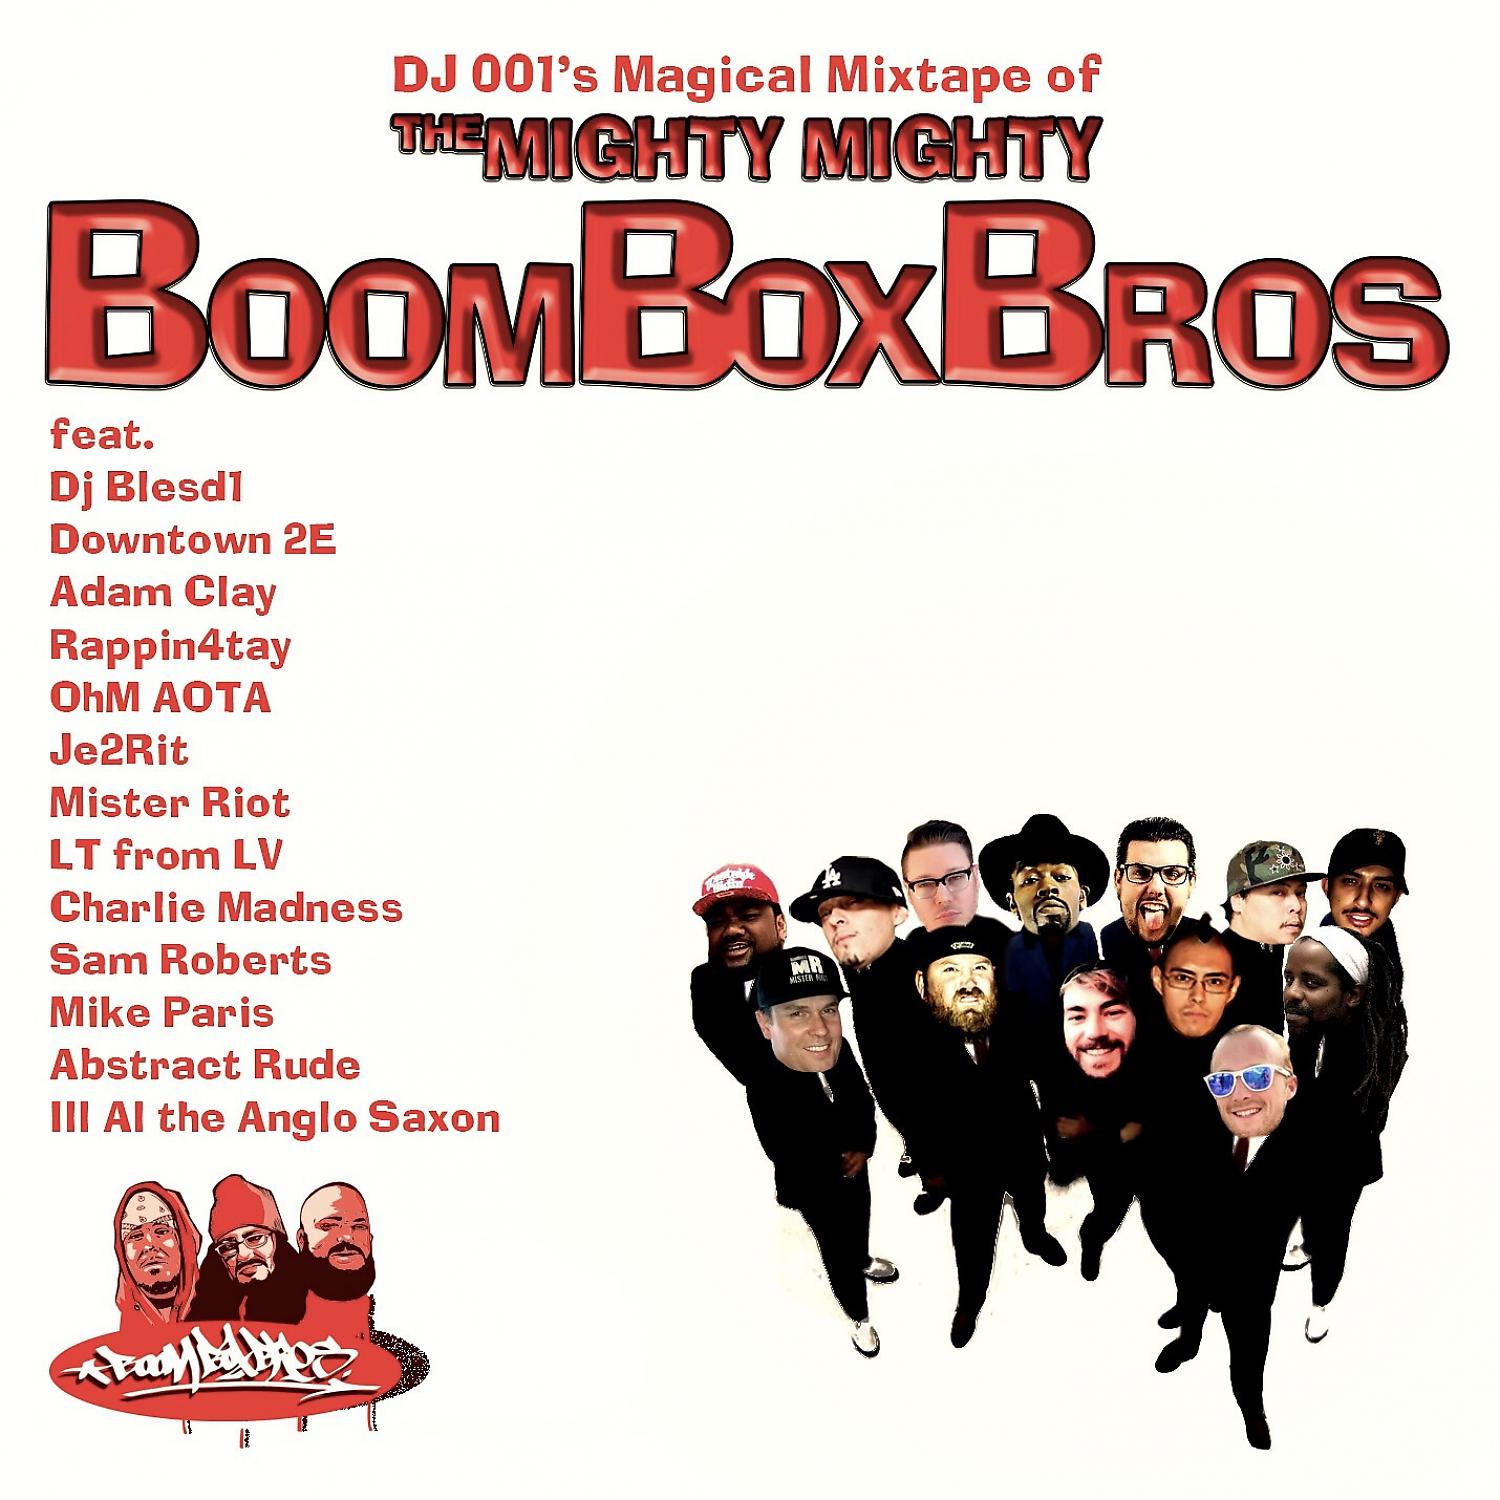 Постер альбома Dj 001's Magical Mixtape of The Mighty Mighty Boom Box Bros